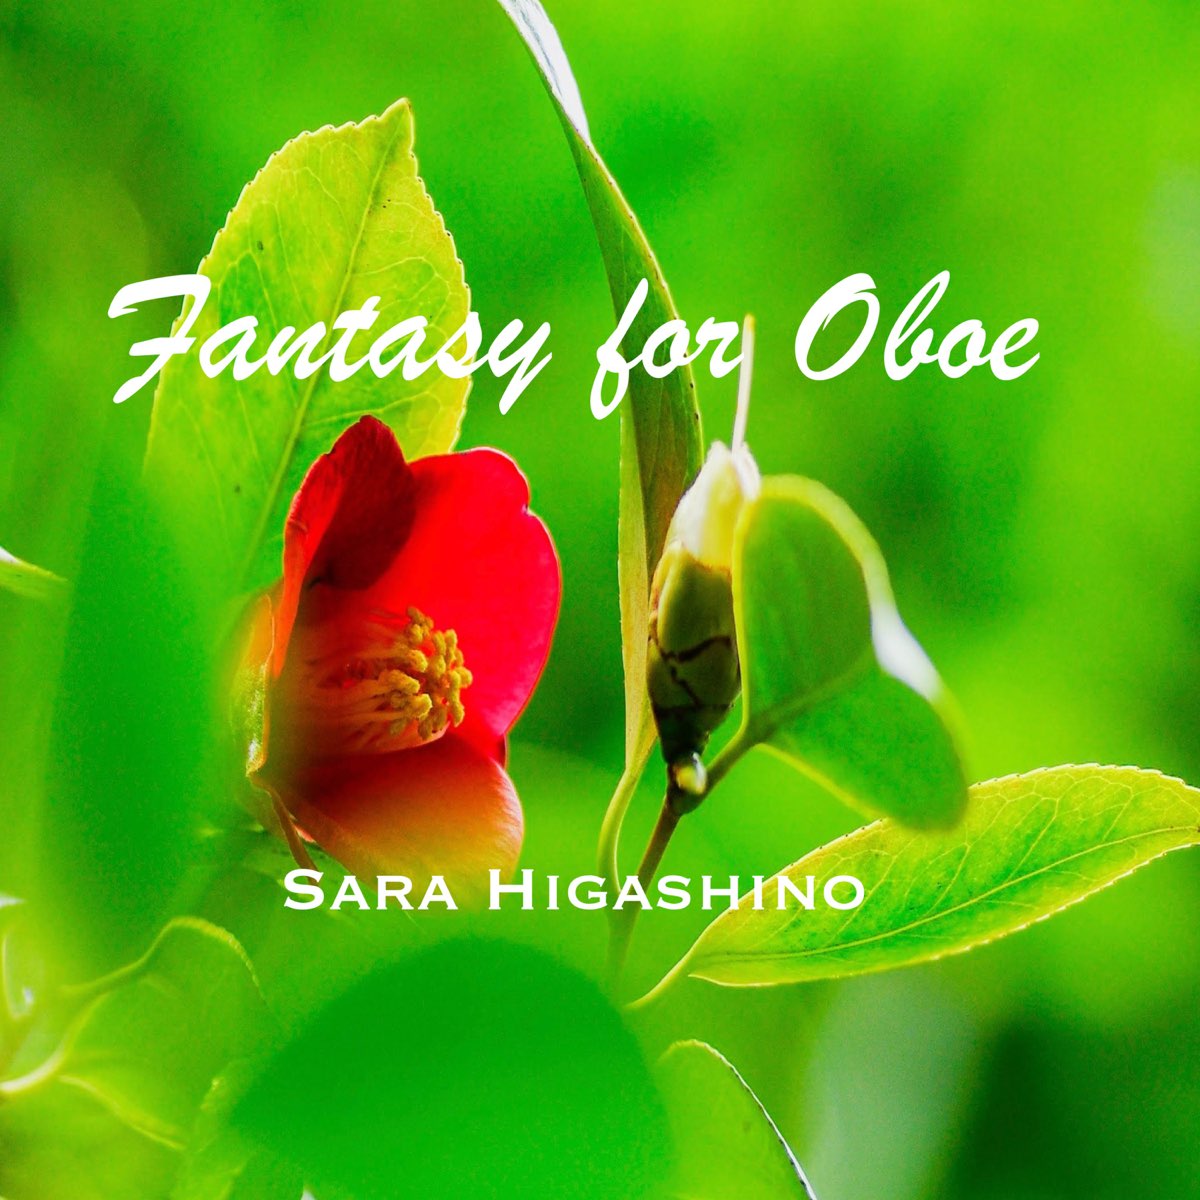 Sara Higashinoの Fantasy For Oboe をapple Musicで